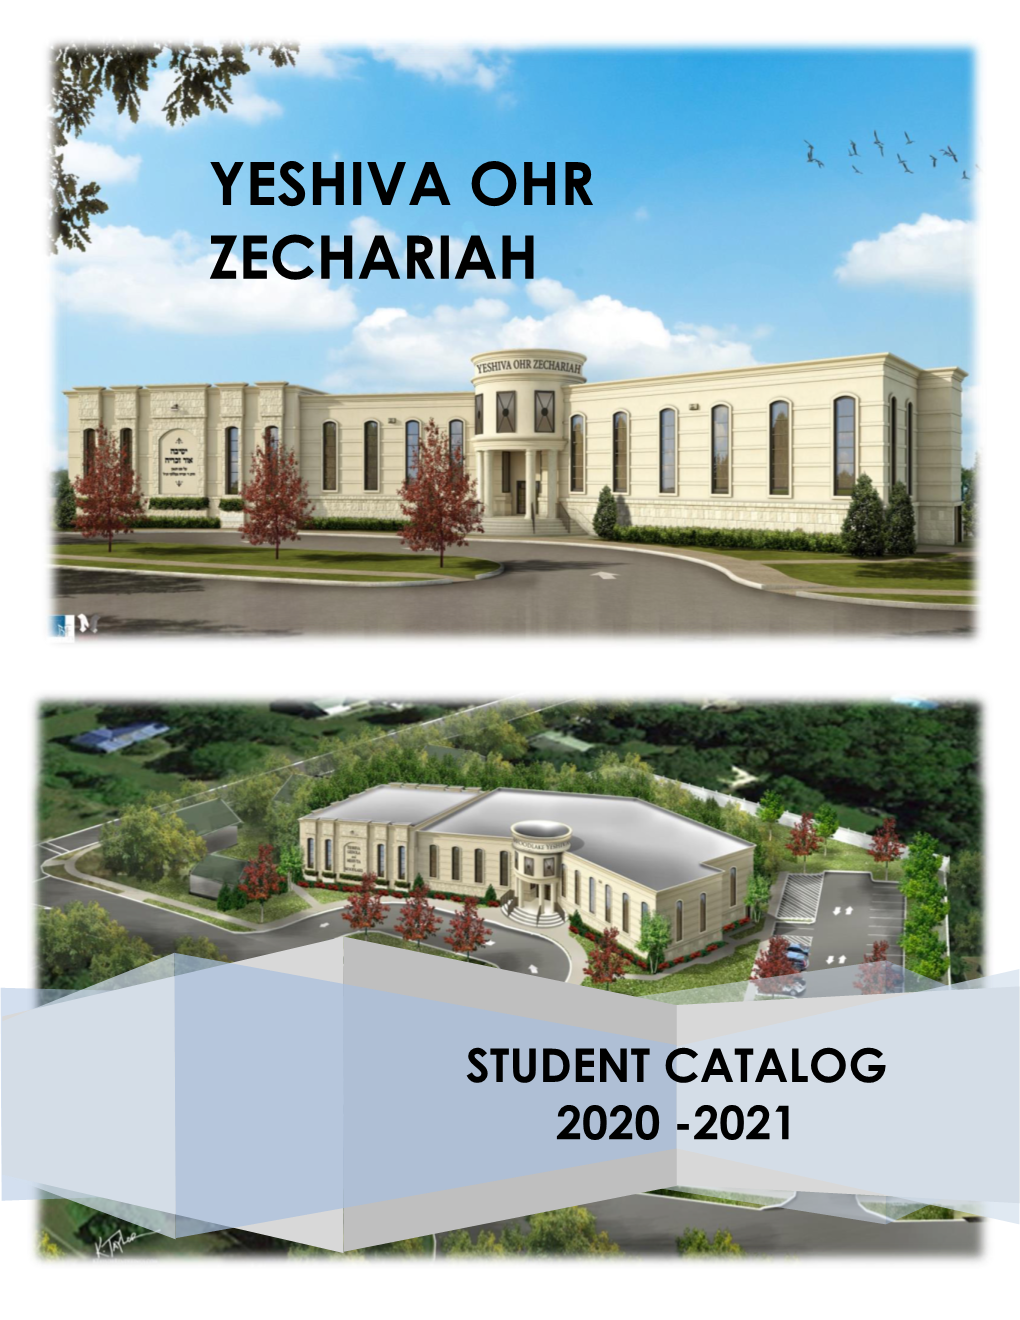 Student Catalog 2020 -2021